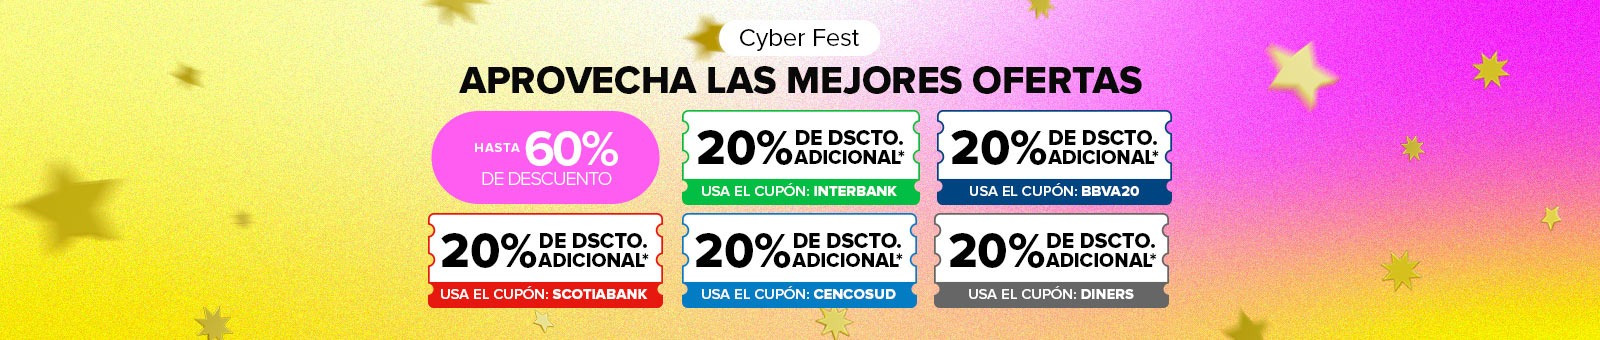 Cyber Fest en Mercado Libre